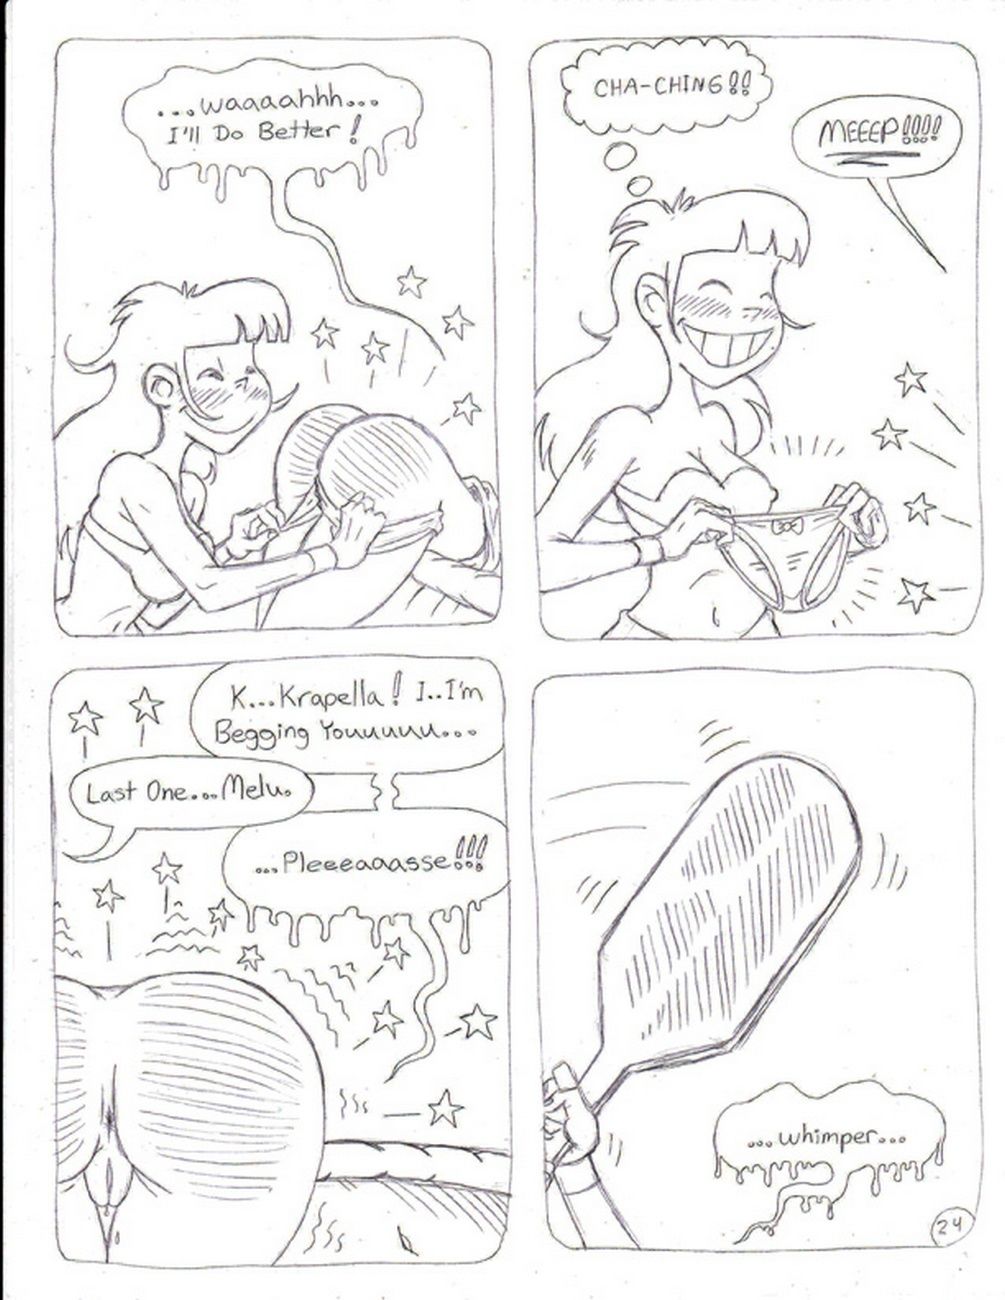 Krapella's Revenge page 25